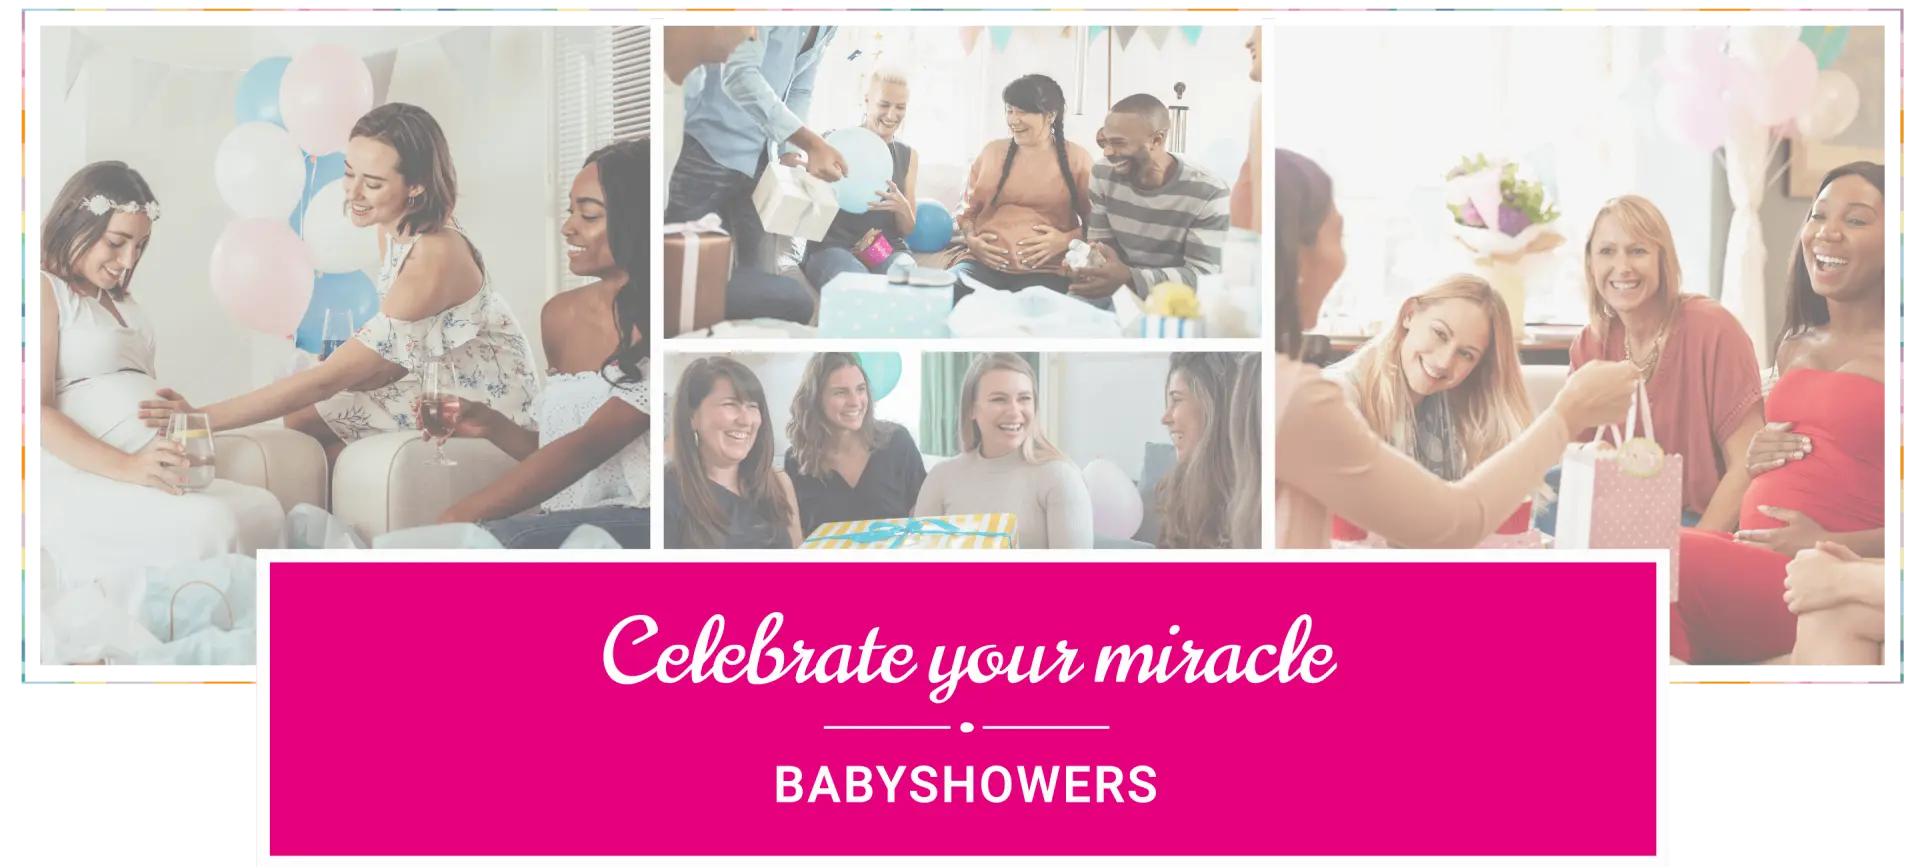 banner vanparys babyshowers mobile